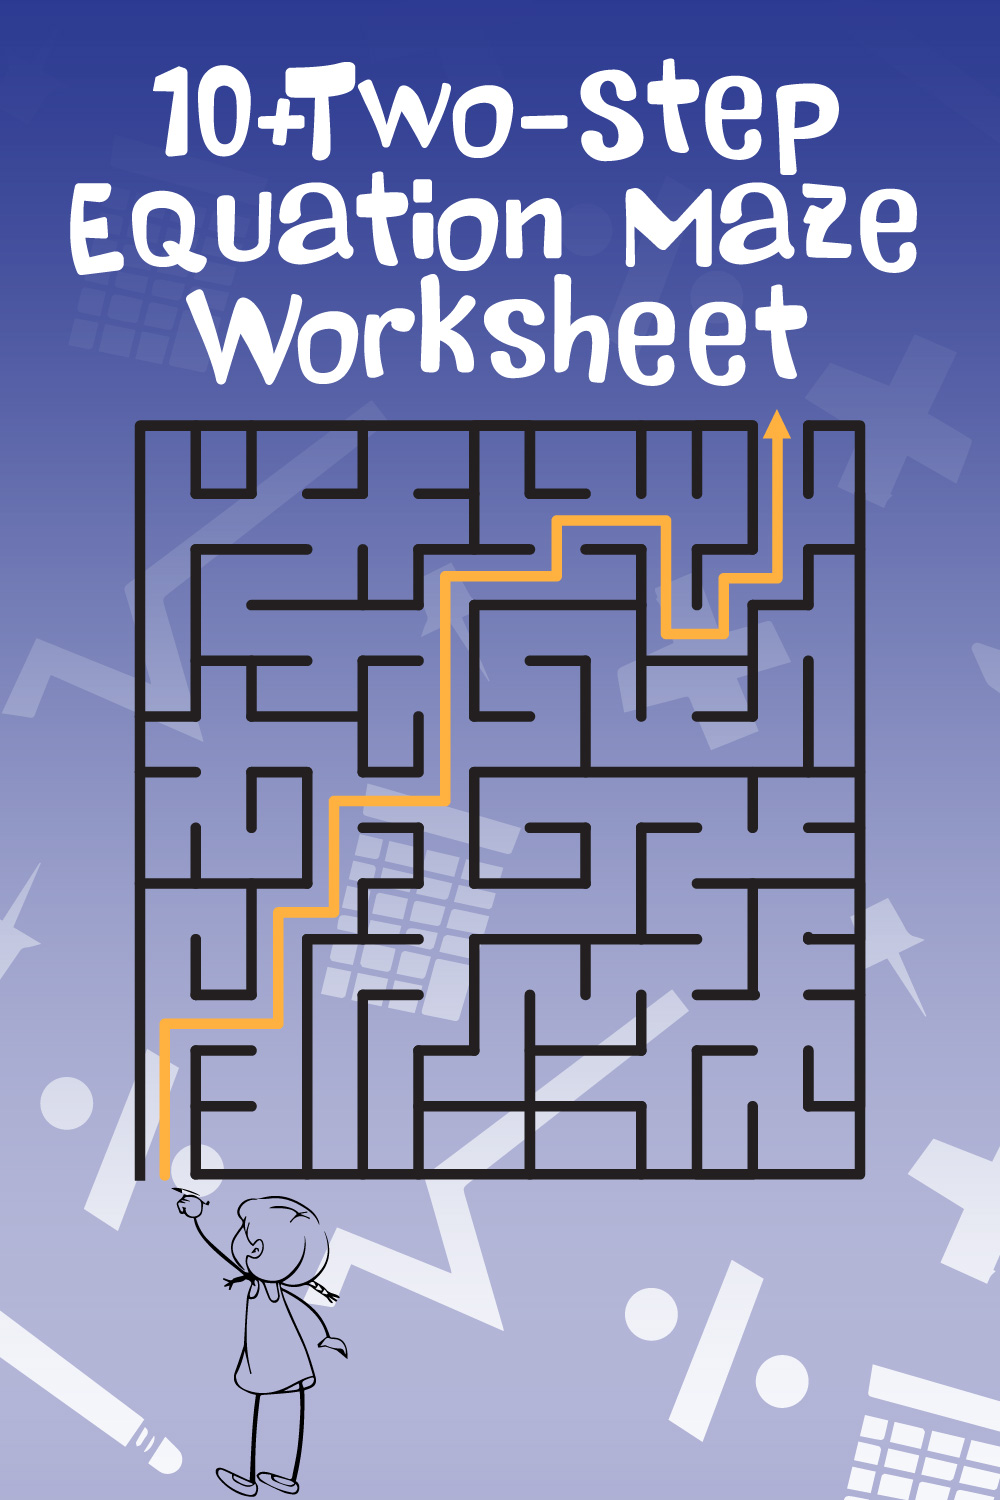 16 Images of Two-Step Equation Maze Worksheet